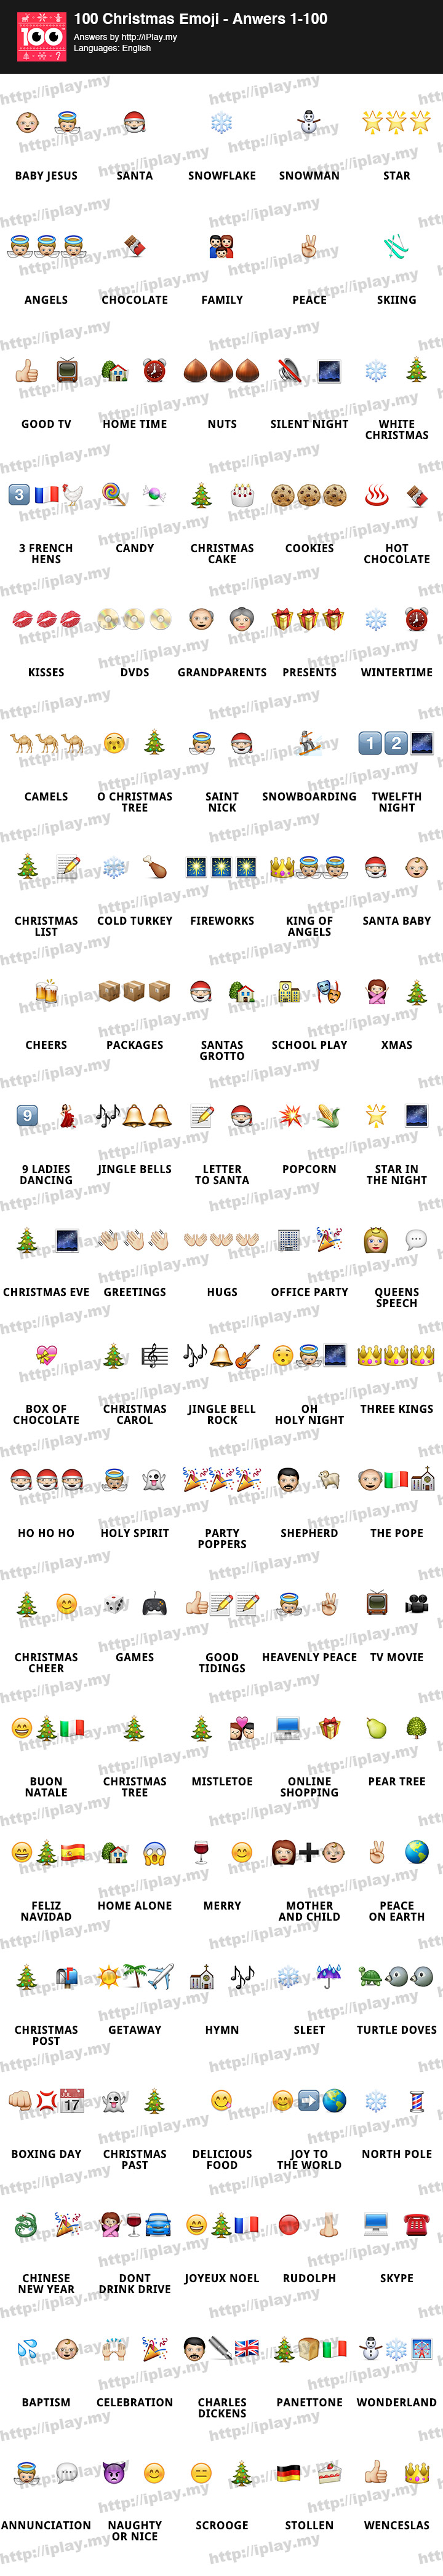 100-Christmas-Emoji-1-100-Answer